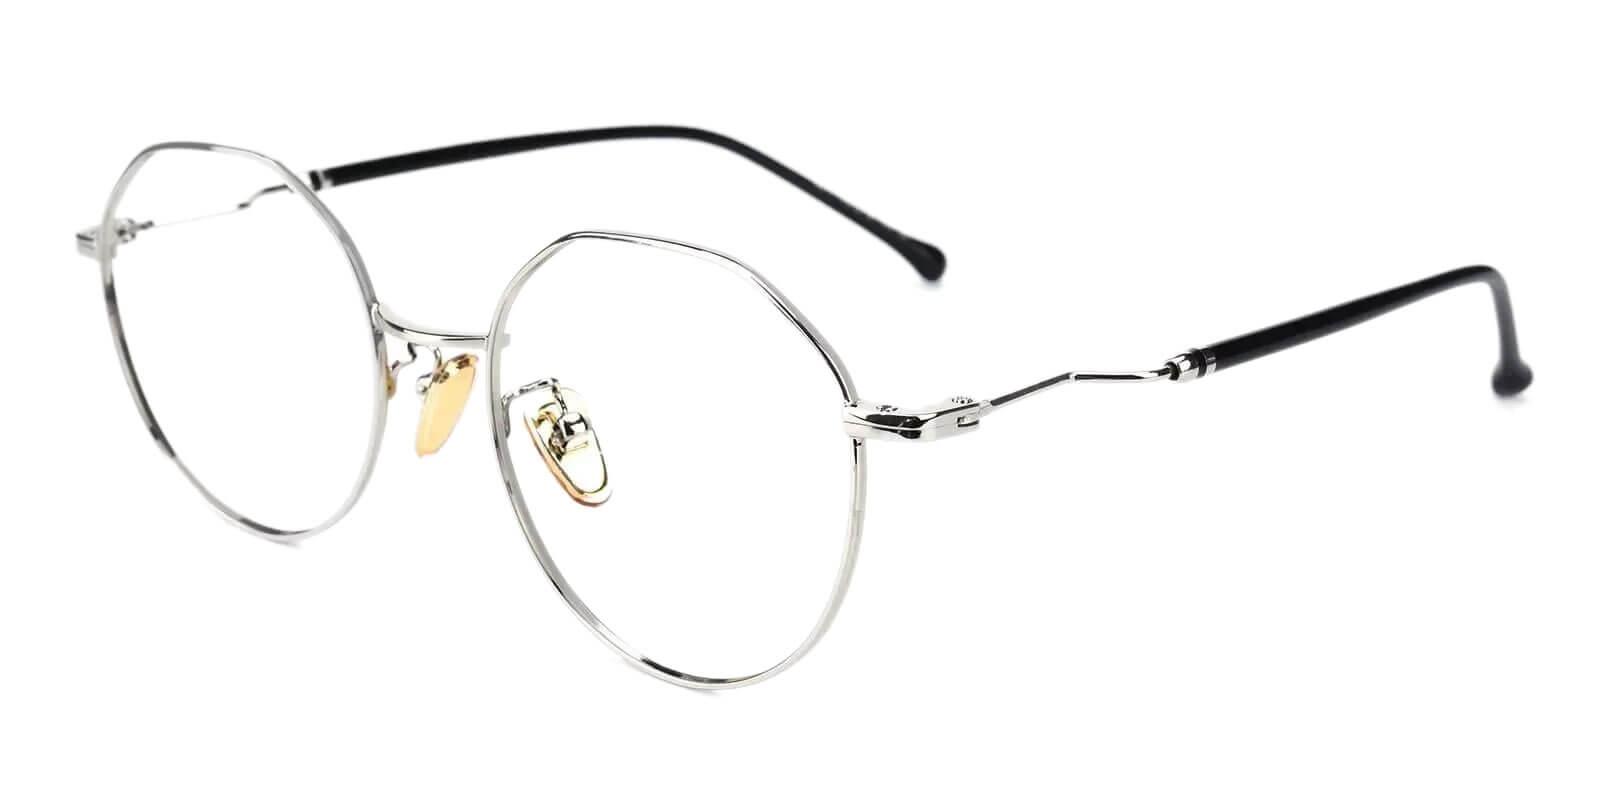 Kawk Silver Metal Eyeglasses , NosePads Frames from ABBE Glasses